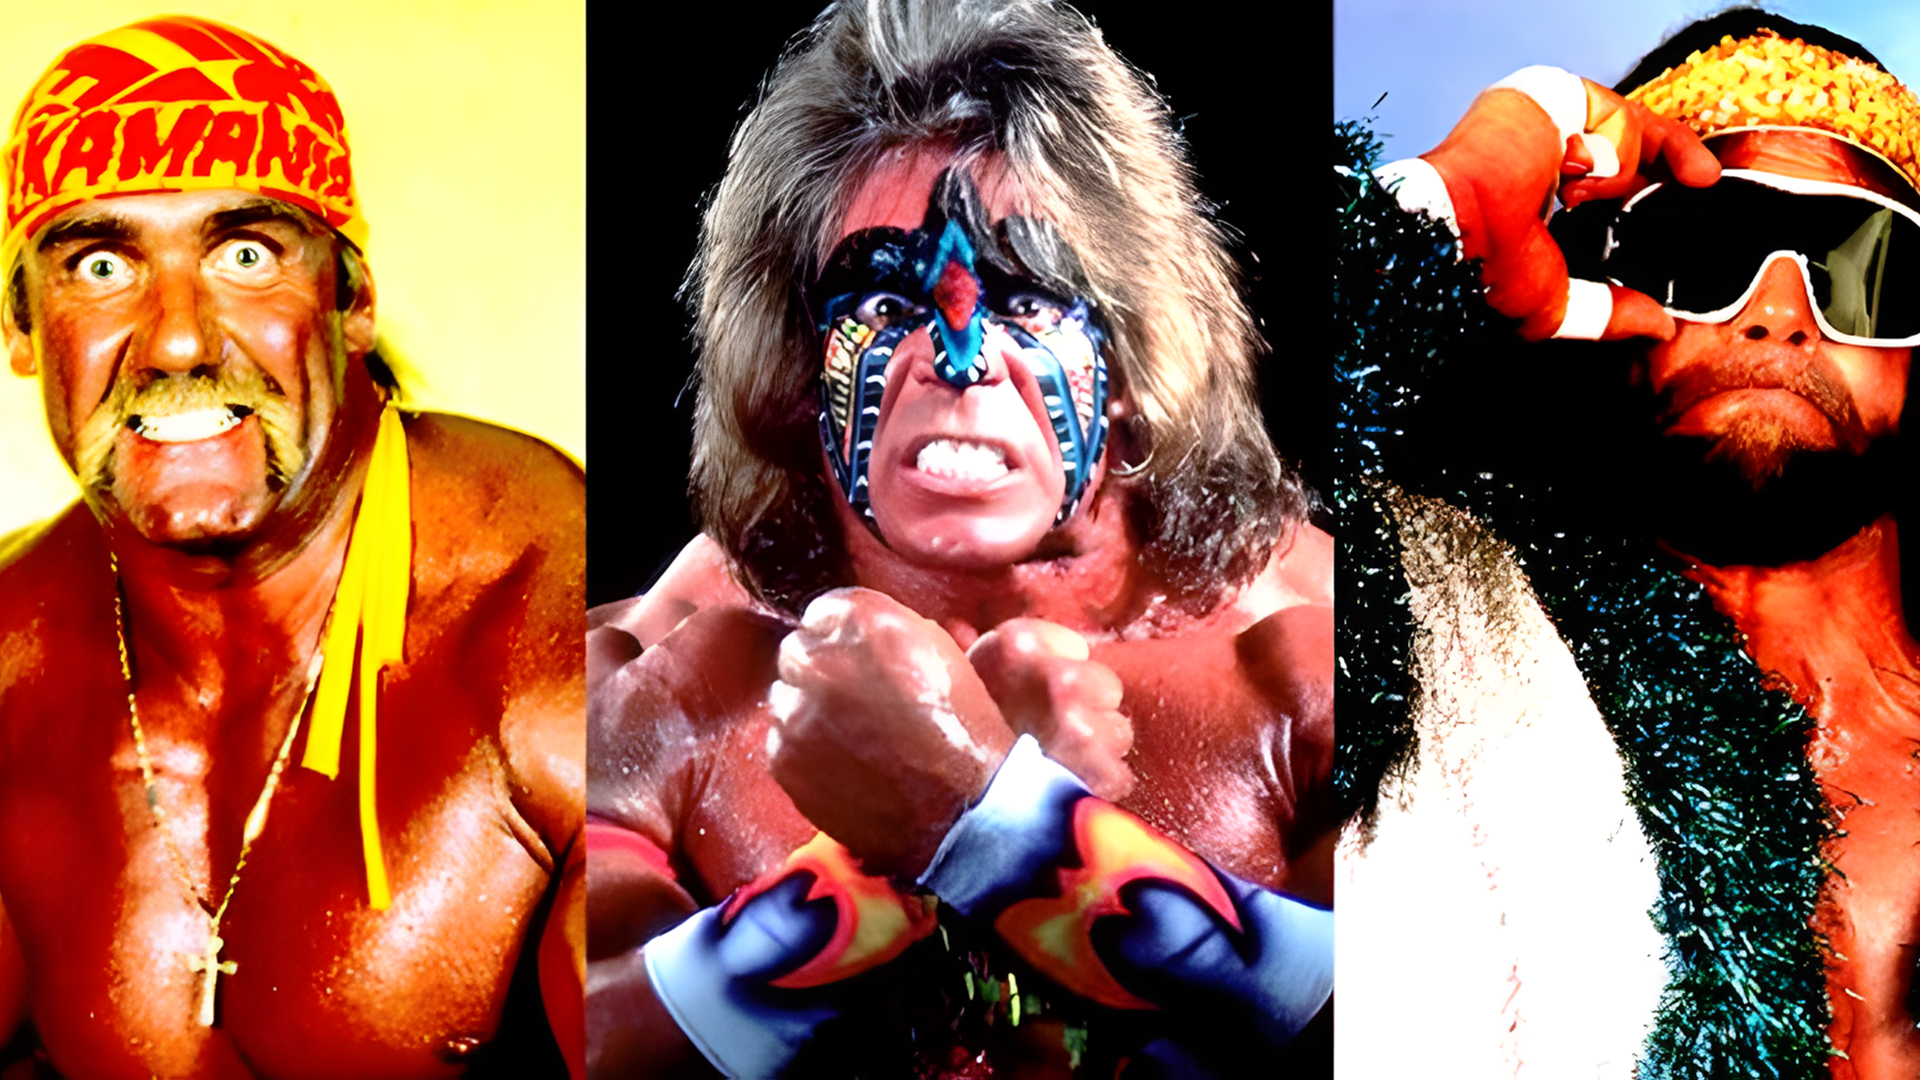 WWF Superstars